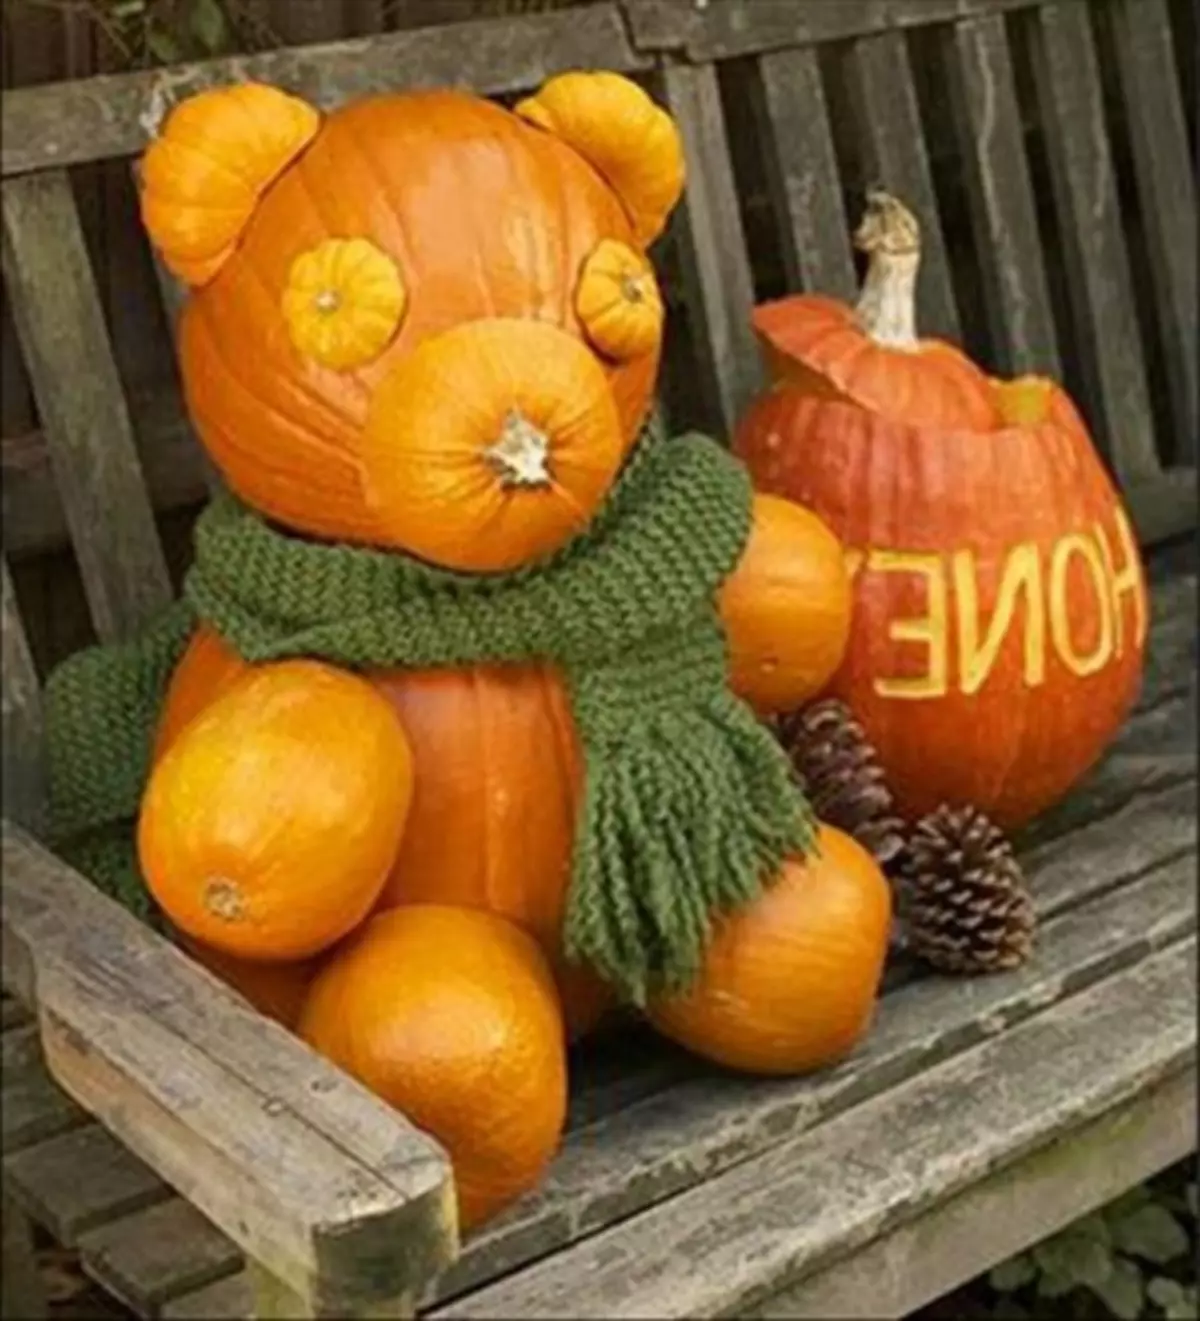 Autumn crafts kubva pumpkin ita ita iwe (44 photos)